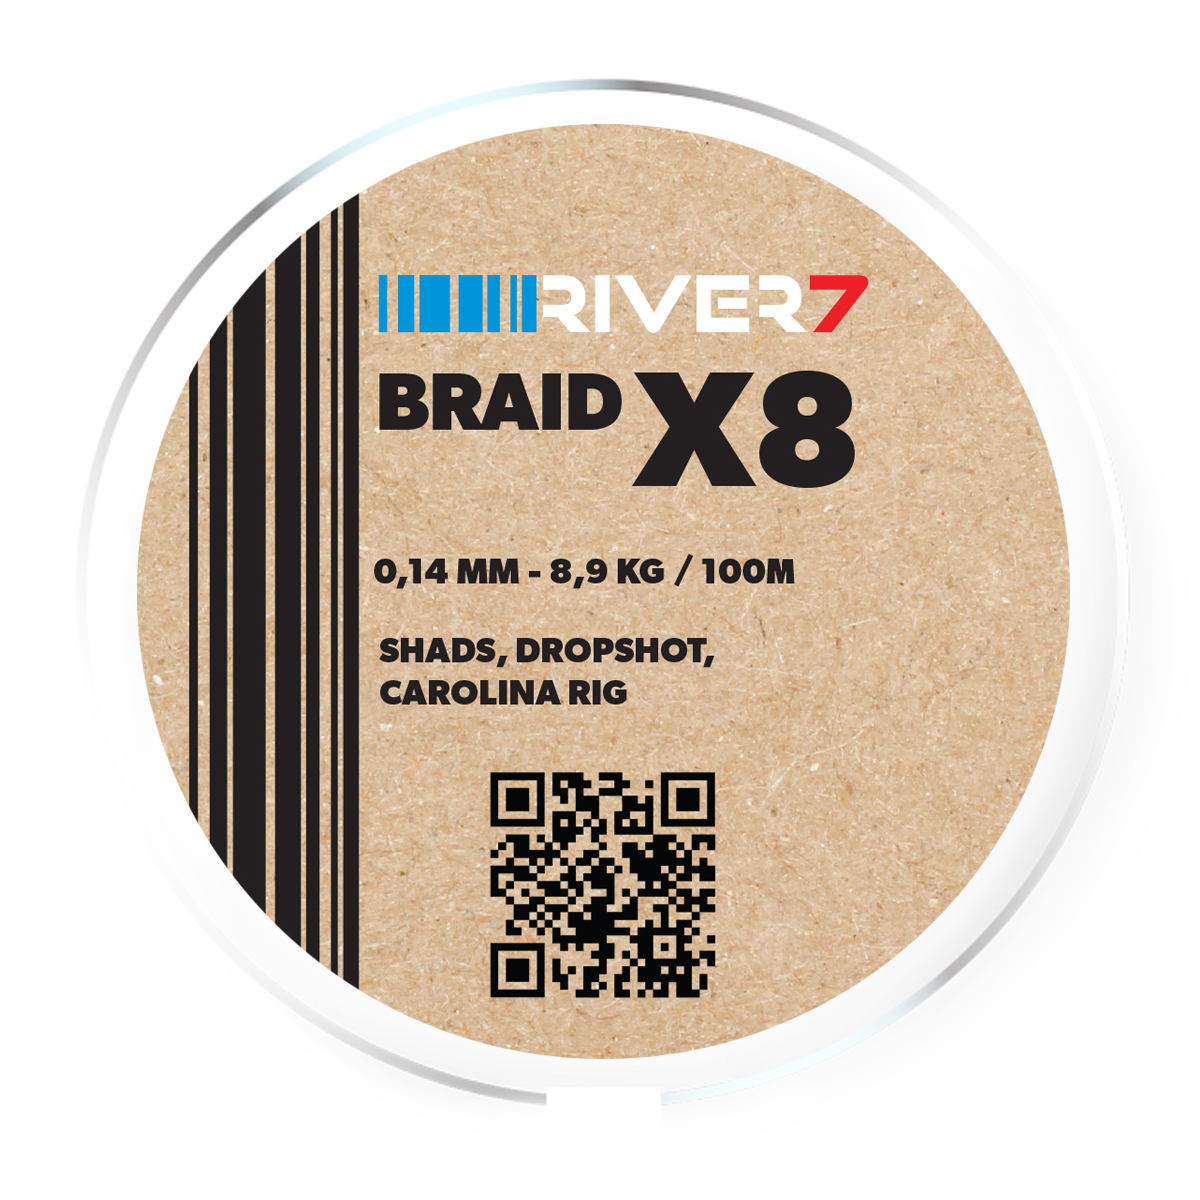 River7 X8 Braid